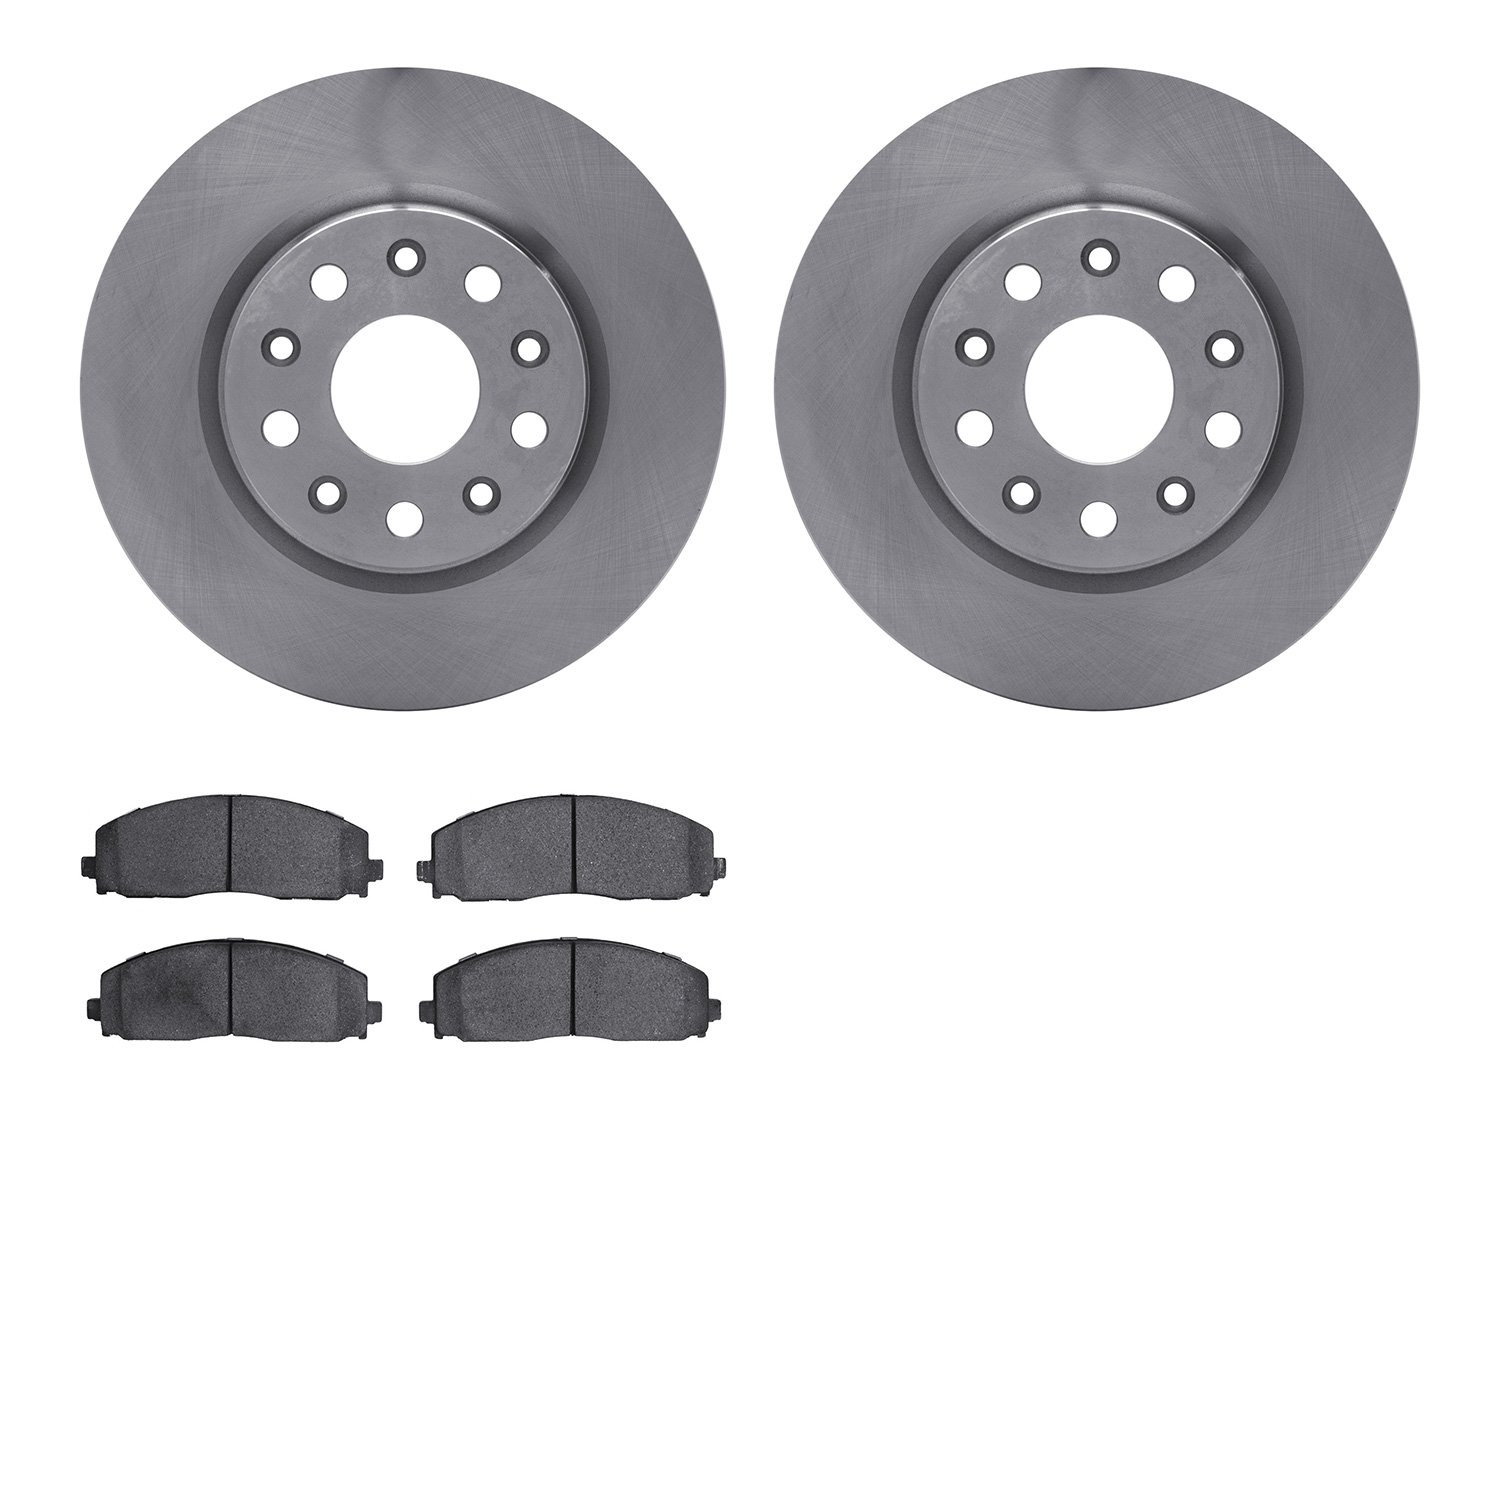 6302-42044 Brake Rotors with 3000-Series Ceramic Brake Pads Kit, Fits Select Mopar, Position: Front